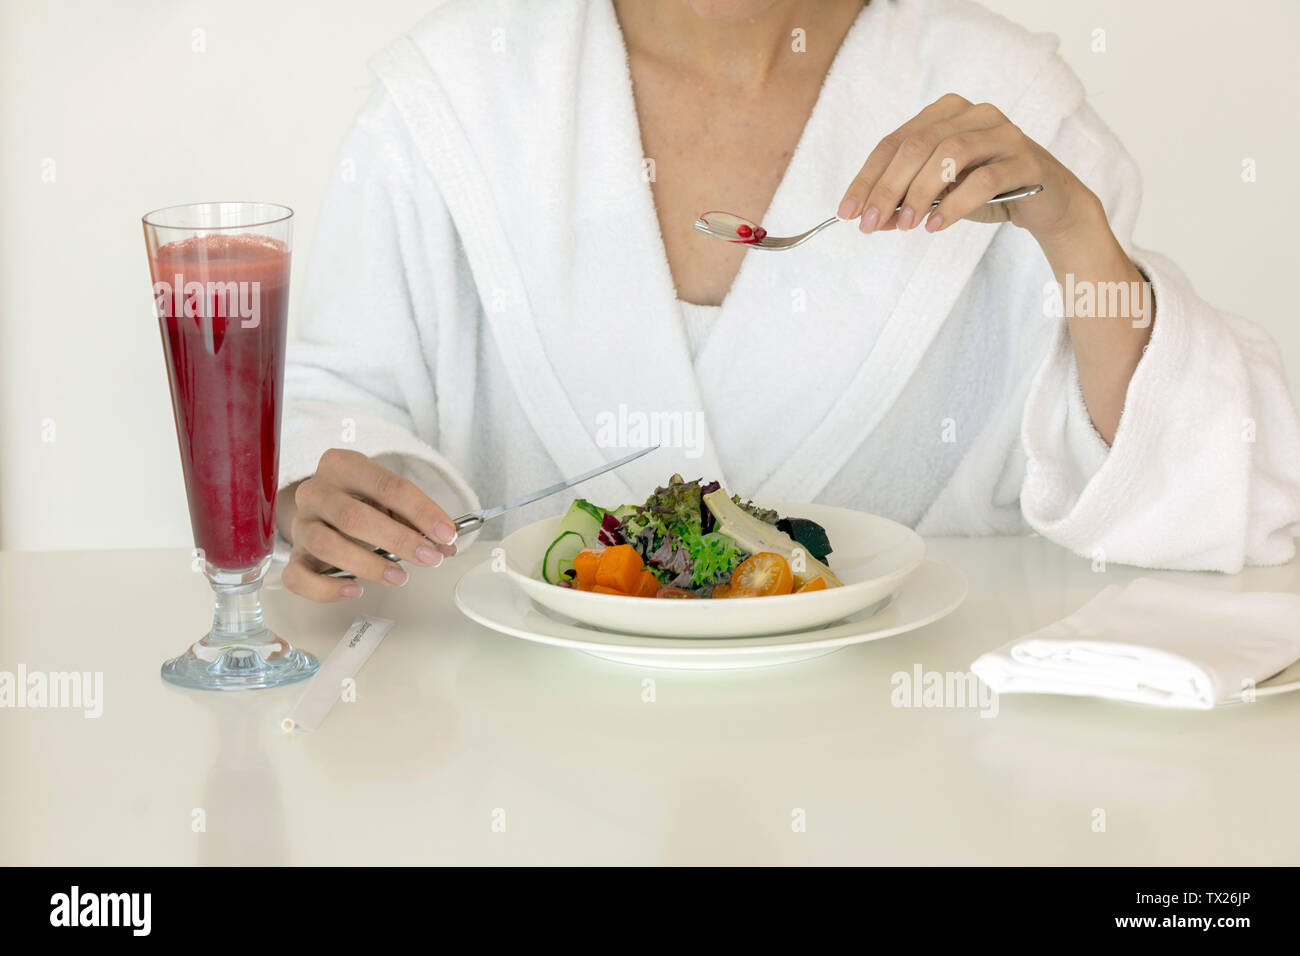 Donna in tunica bianca insalata mangiare a tavola Foto Stock